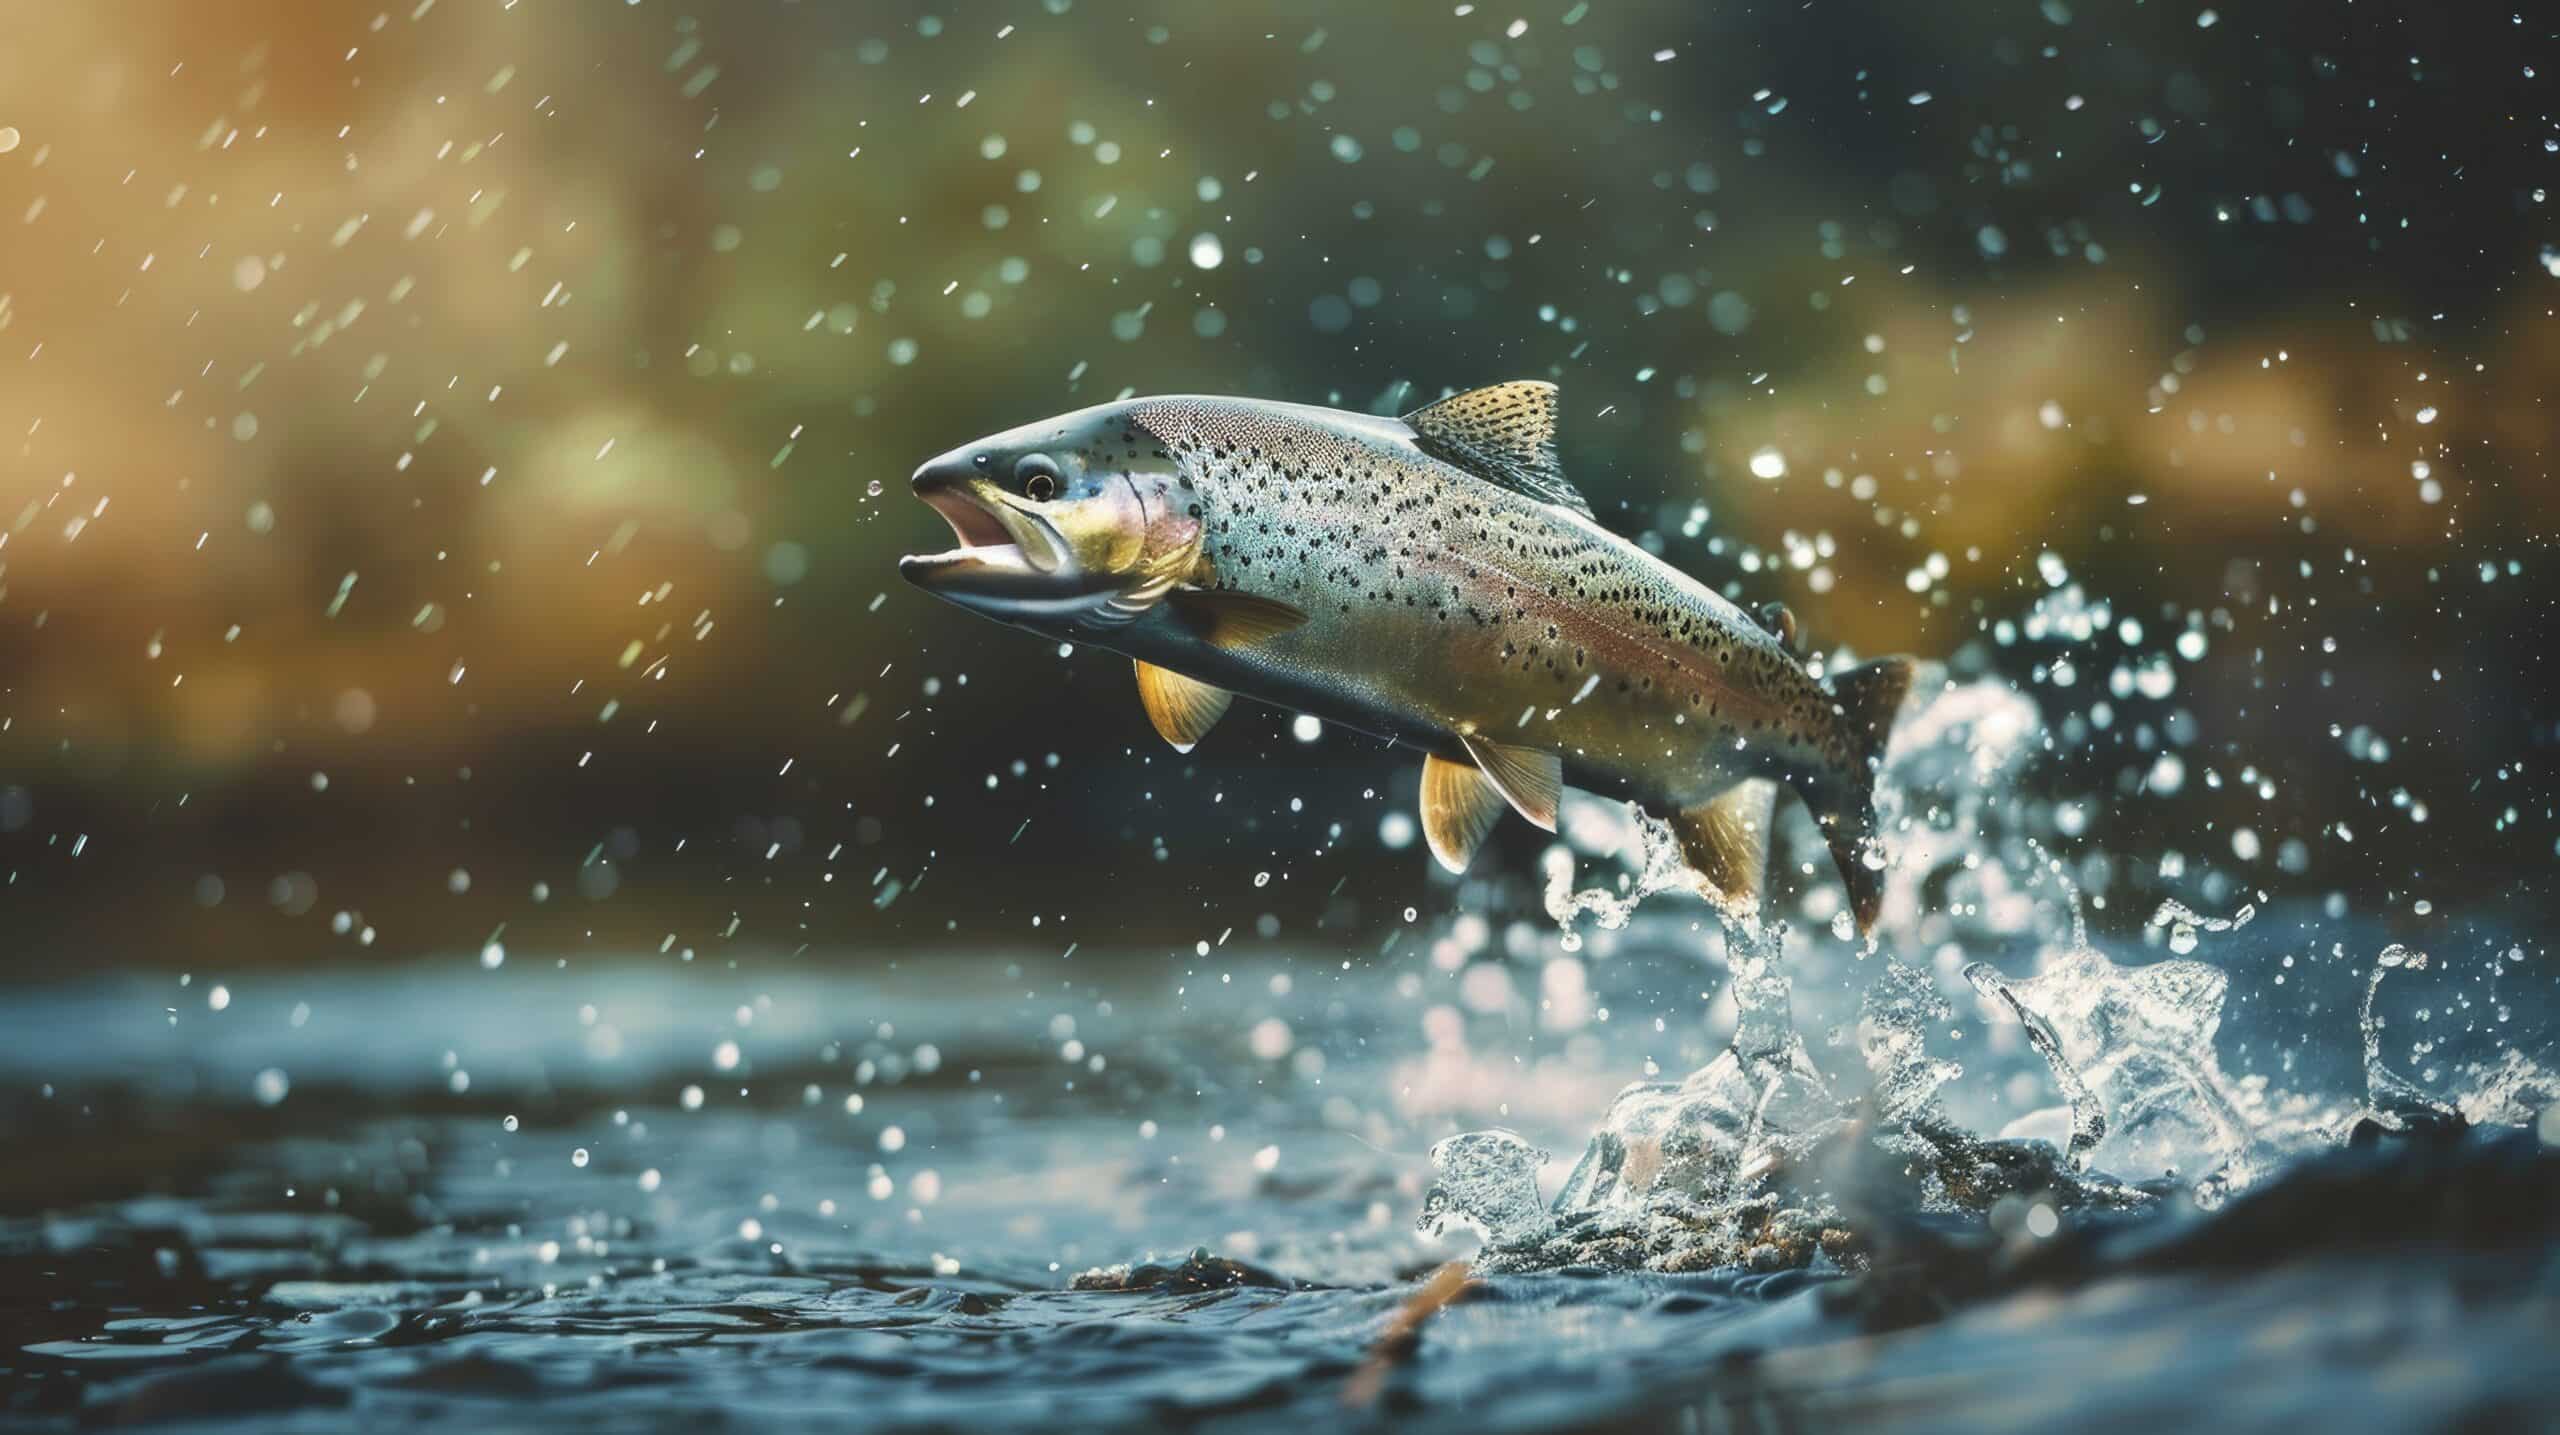 fanatic4fishing.com : Is it good to fish when its raining?